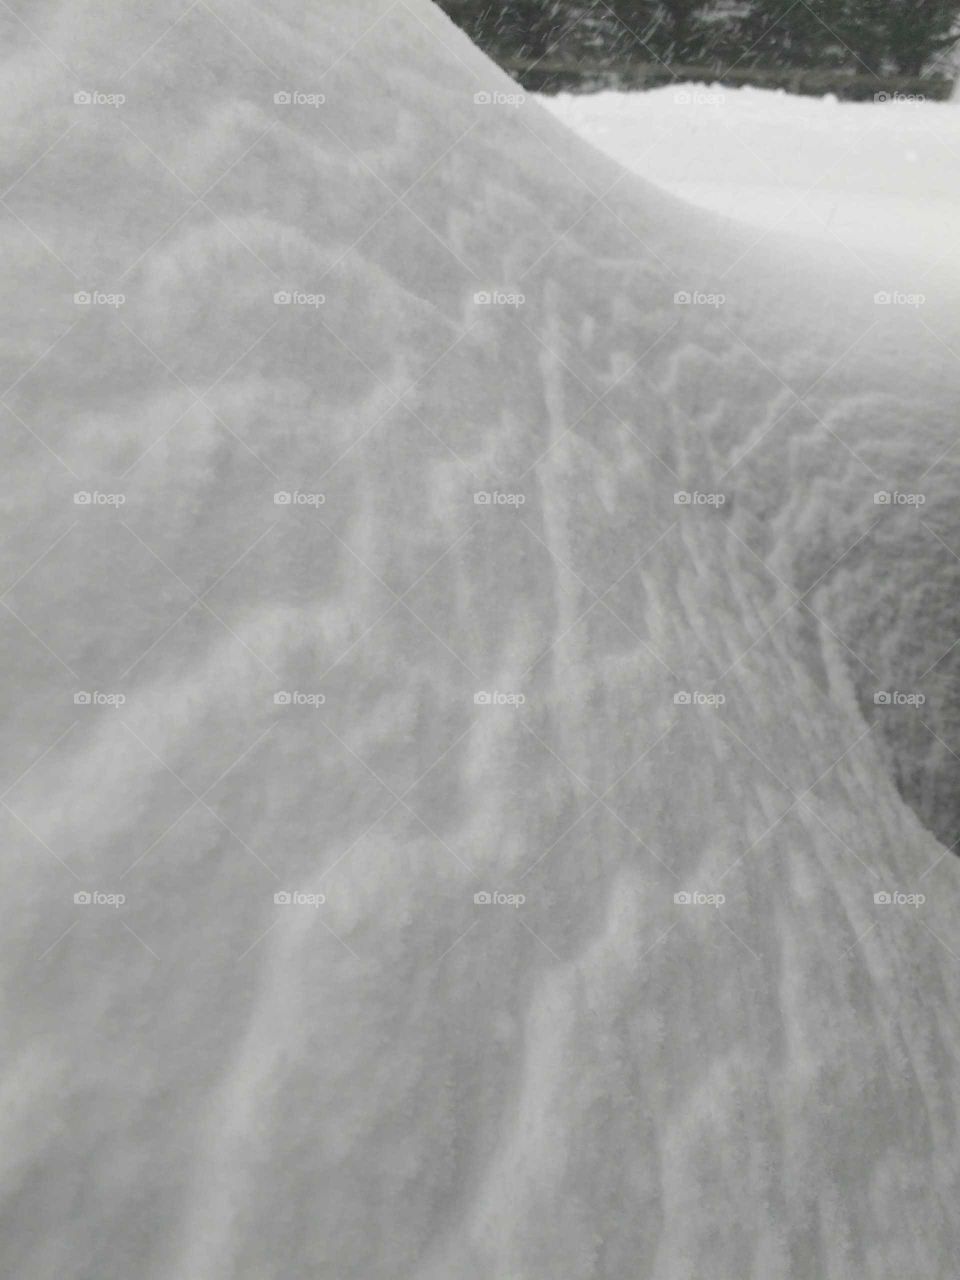 contours of a snow drift